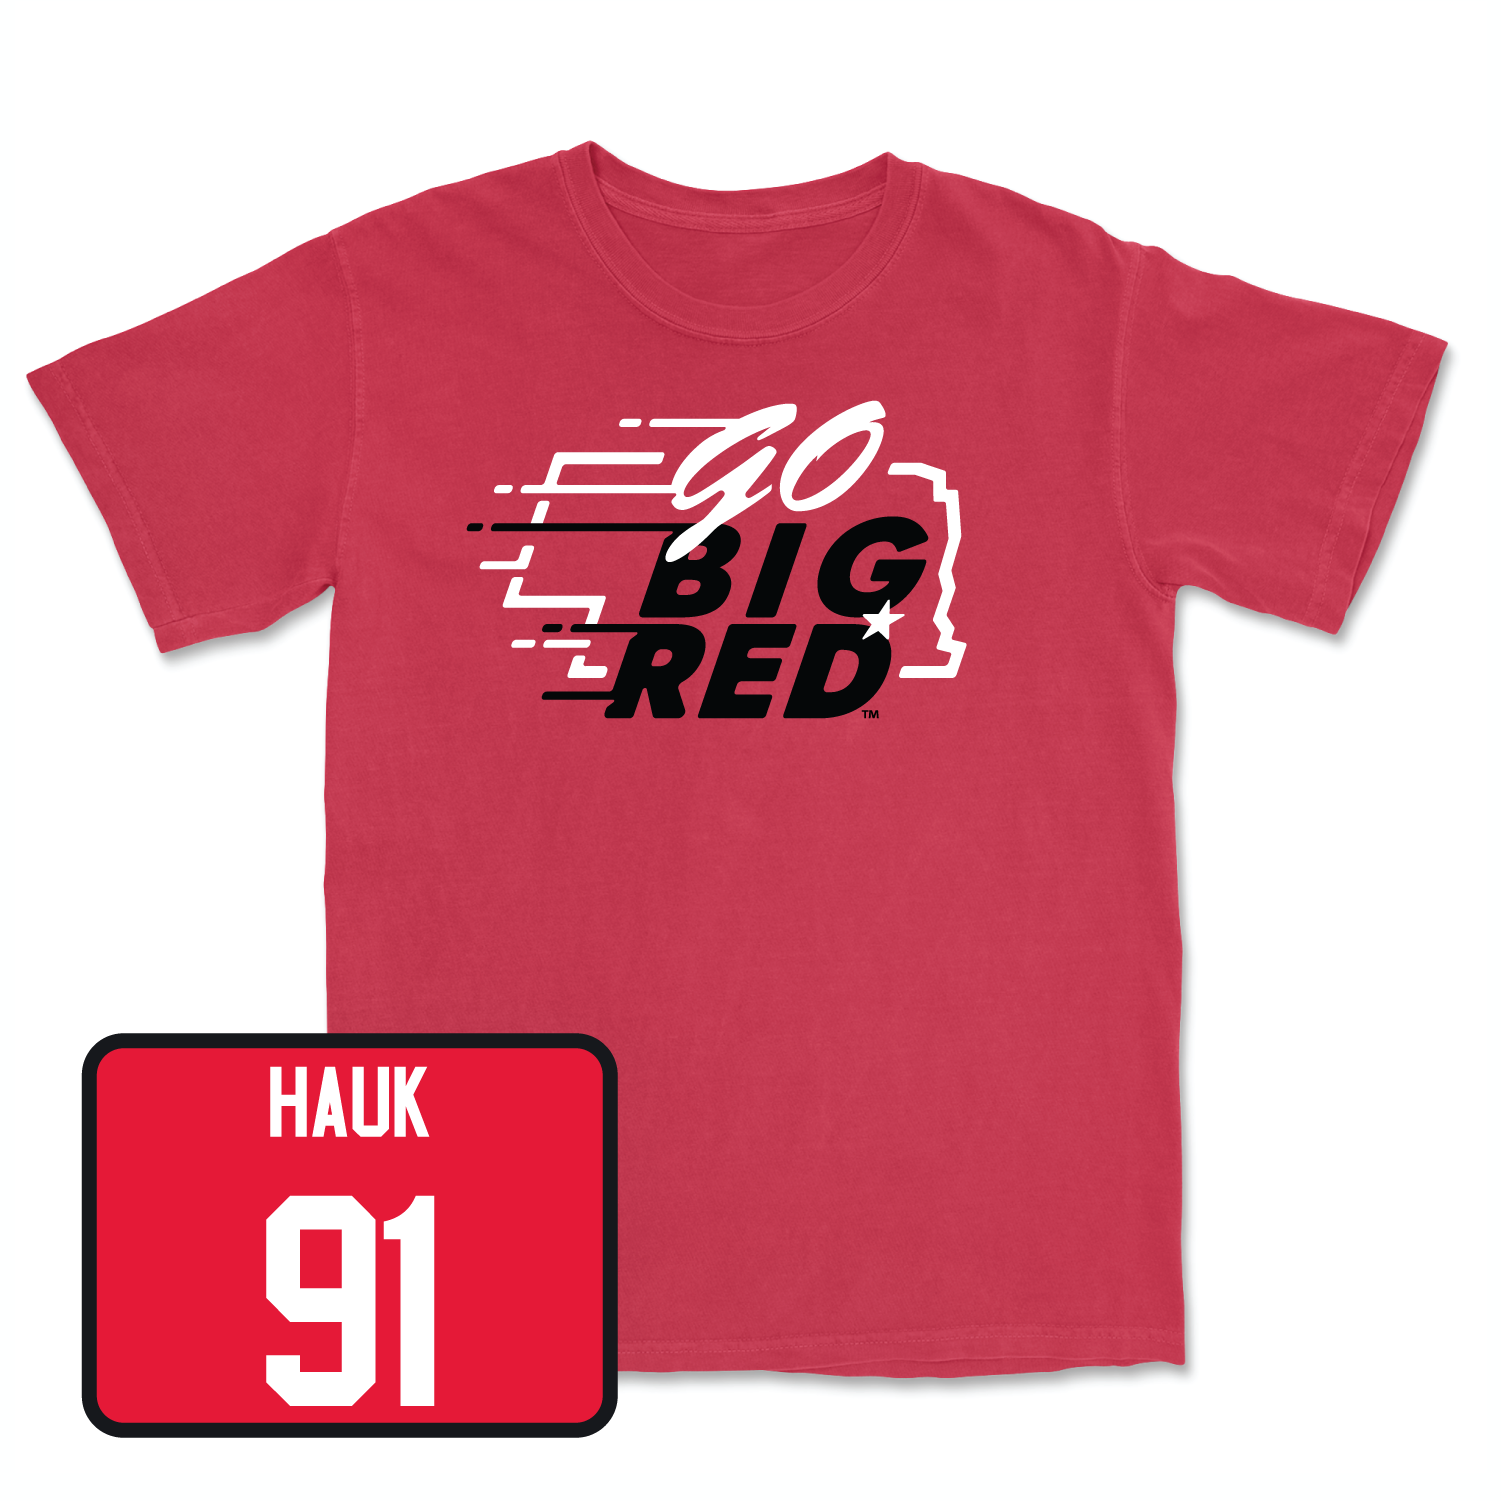 Red Women's Soccer GBR Tee 2X-Large / Sami Hauk | #91